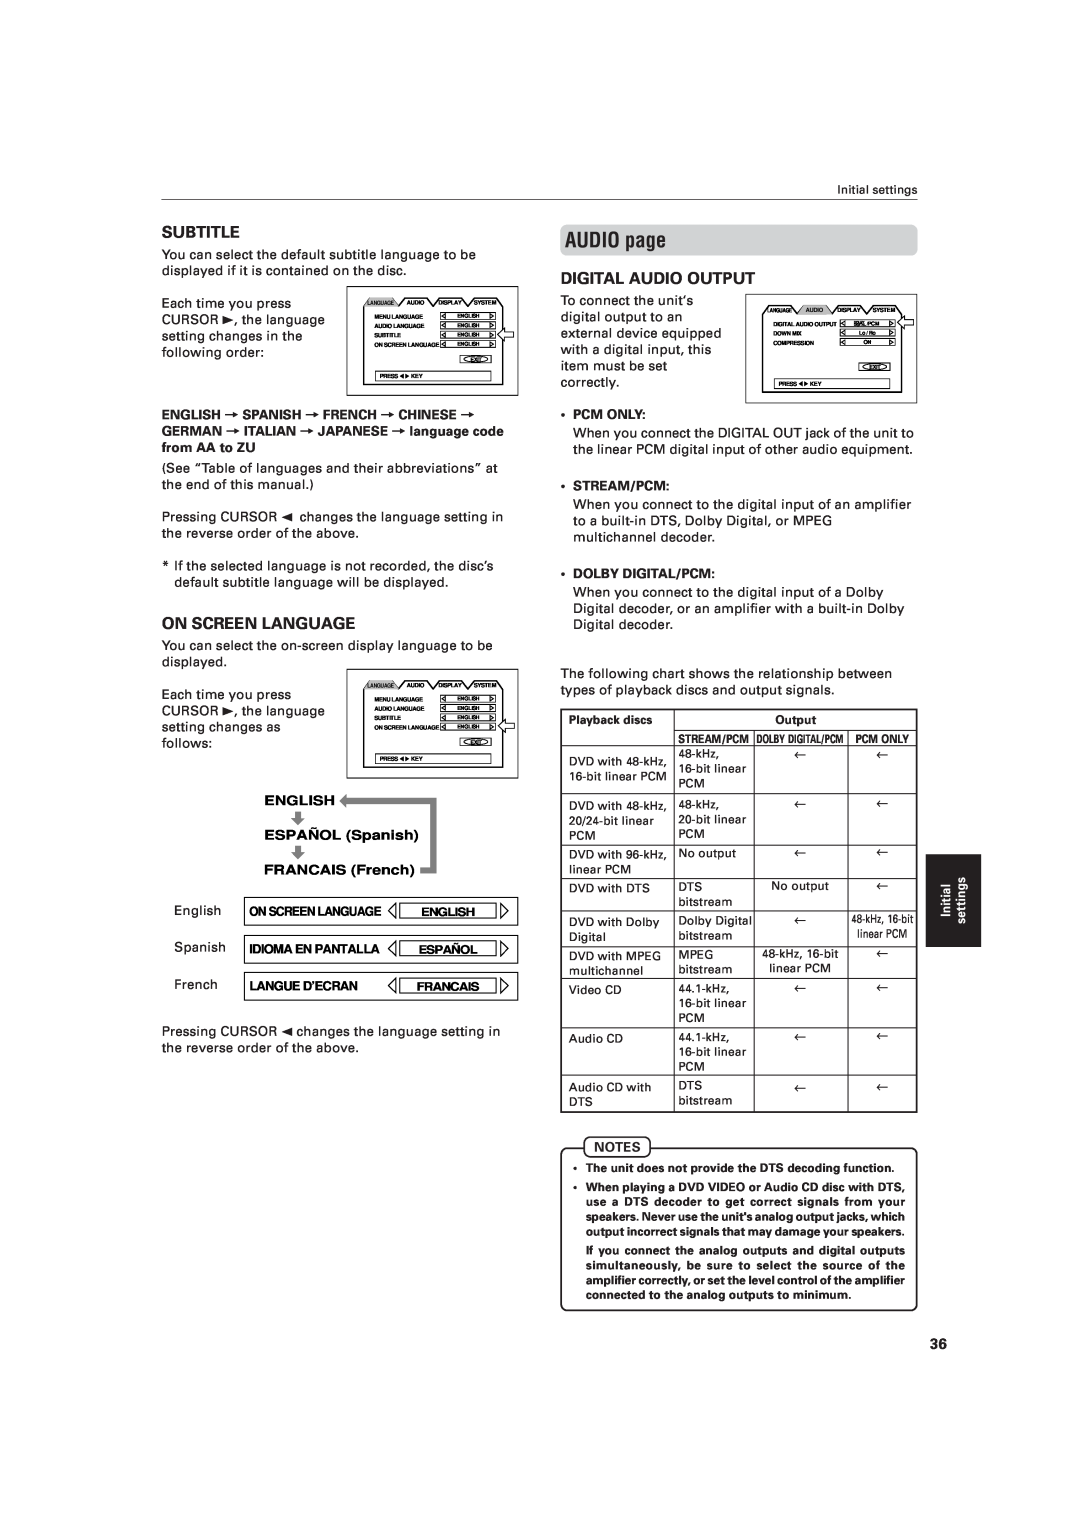 JVC XV-521BK manual AUDIO page, Subtitle, Digital Audio Output, On Screen Language, ENGLISH ESPAÑOL Spanish FRANCAIS French 